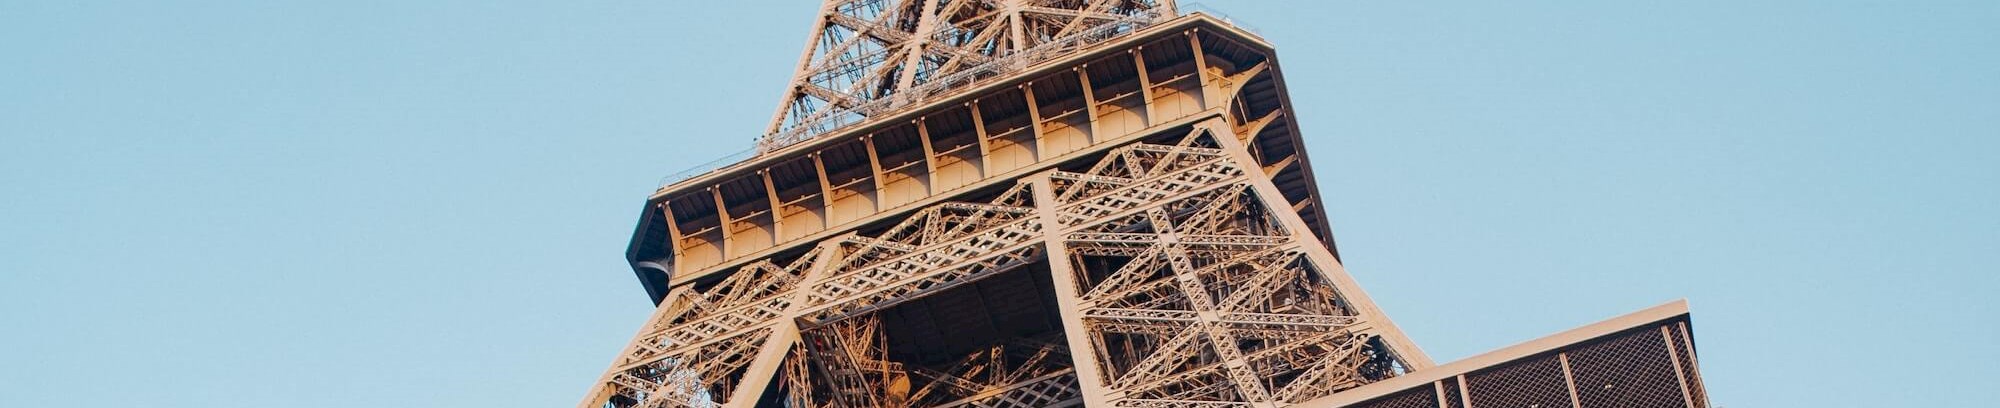 Eiffeltårnet set i frøperspektiv